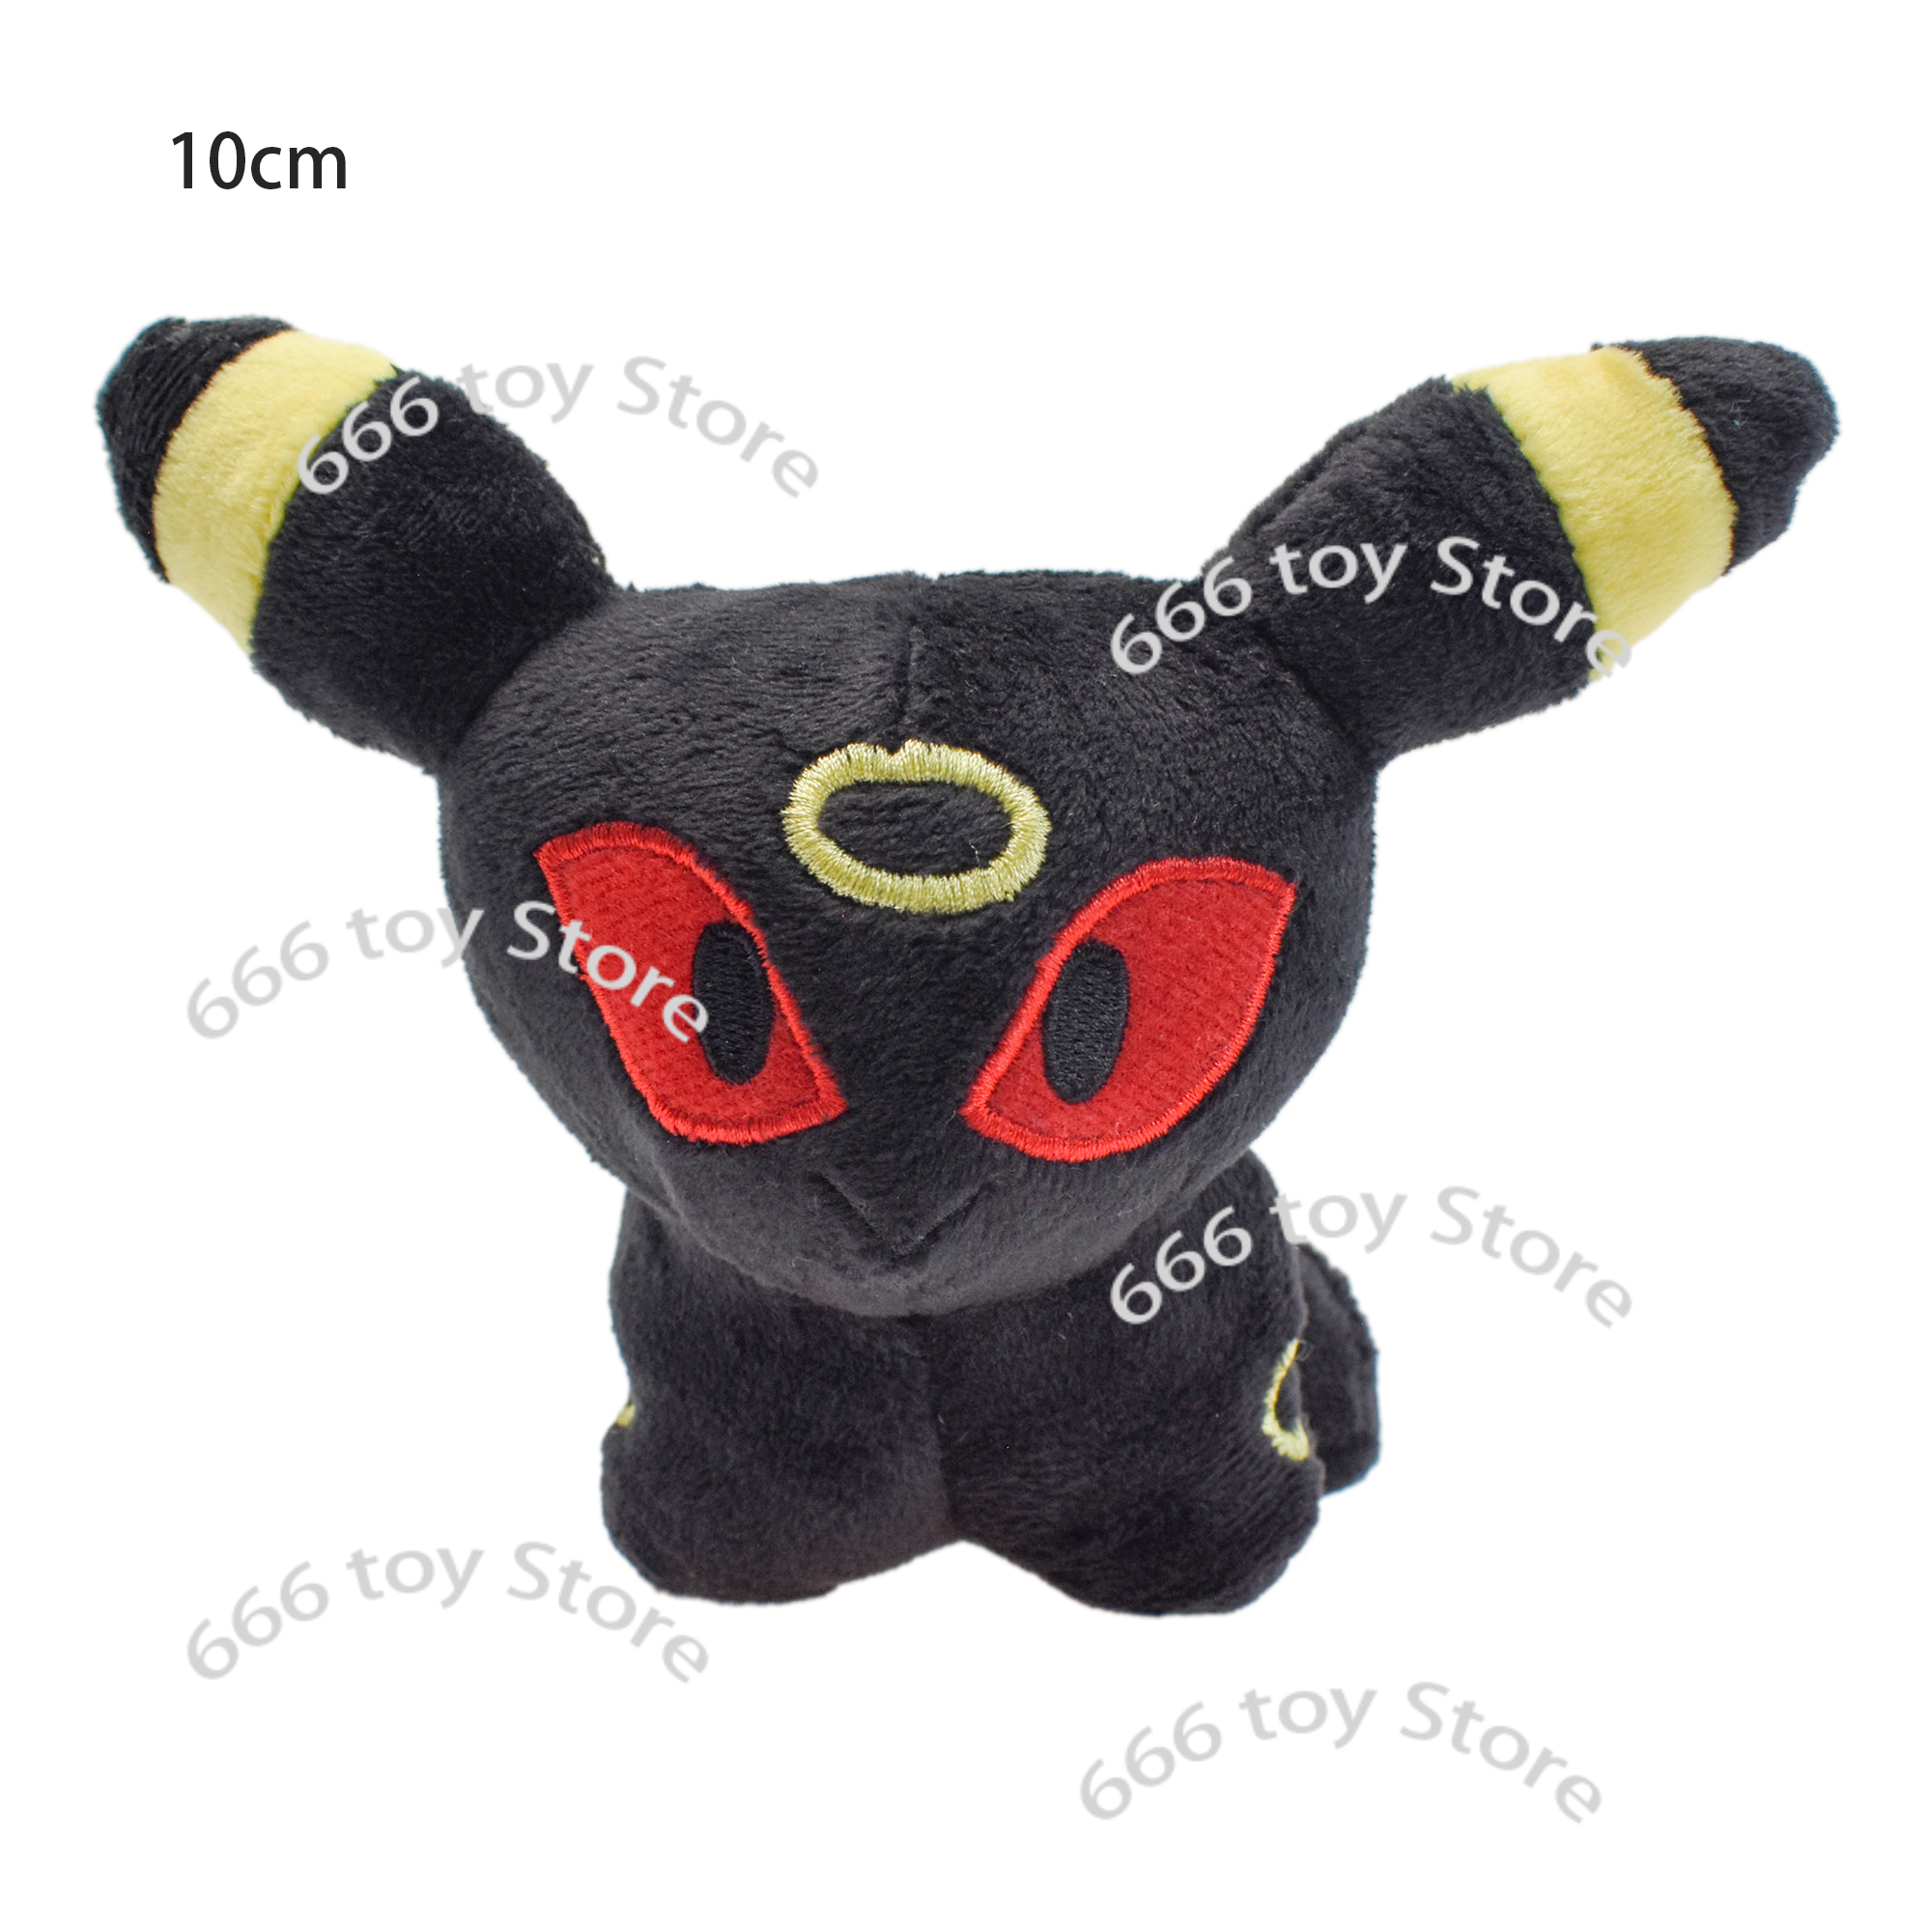 WWWL Peluche Standing Shiny Animal Stuffed Plush Quality Cartoon Toy 23 cm Umbreon 